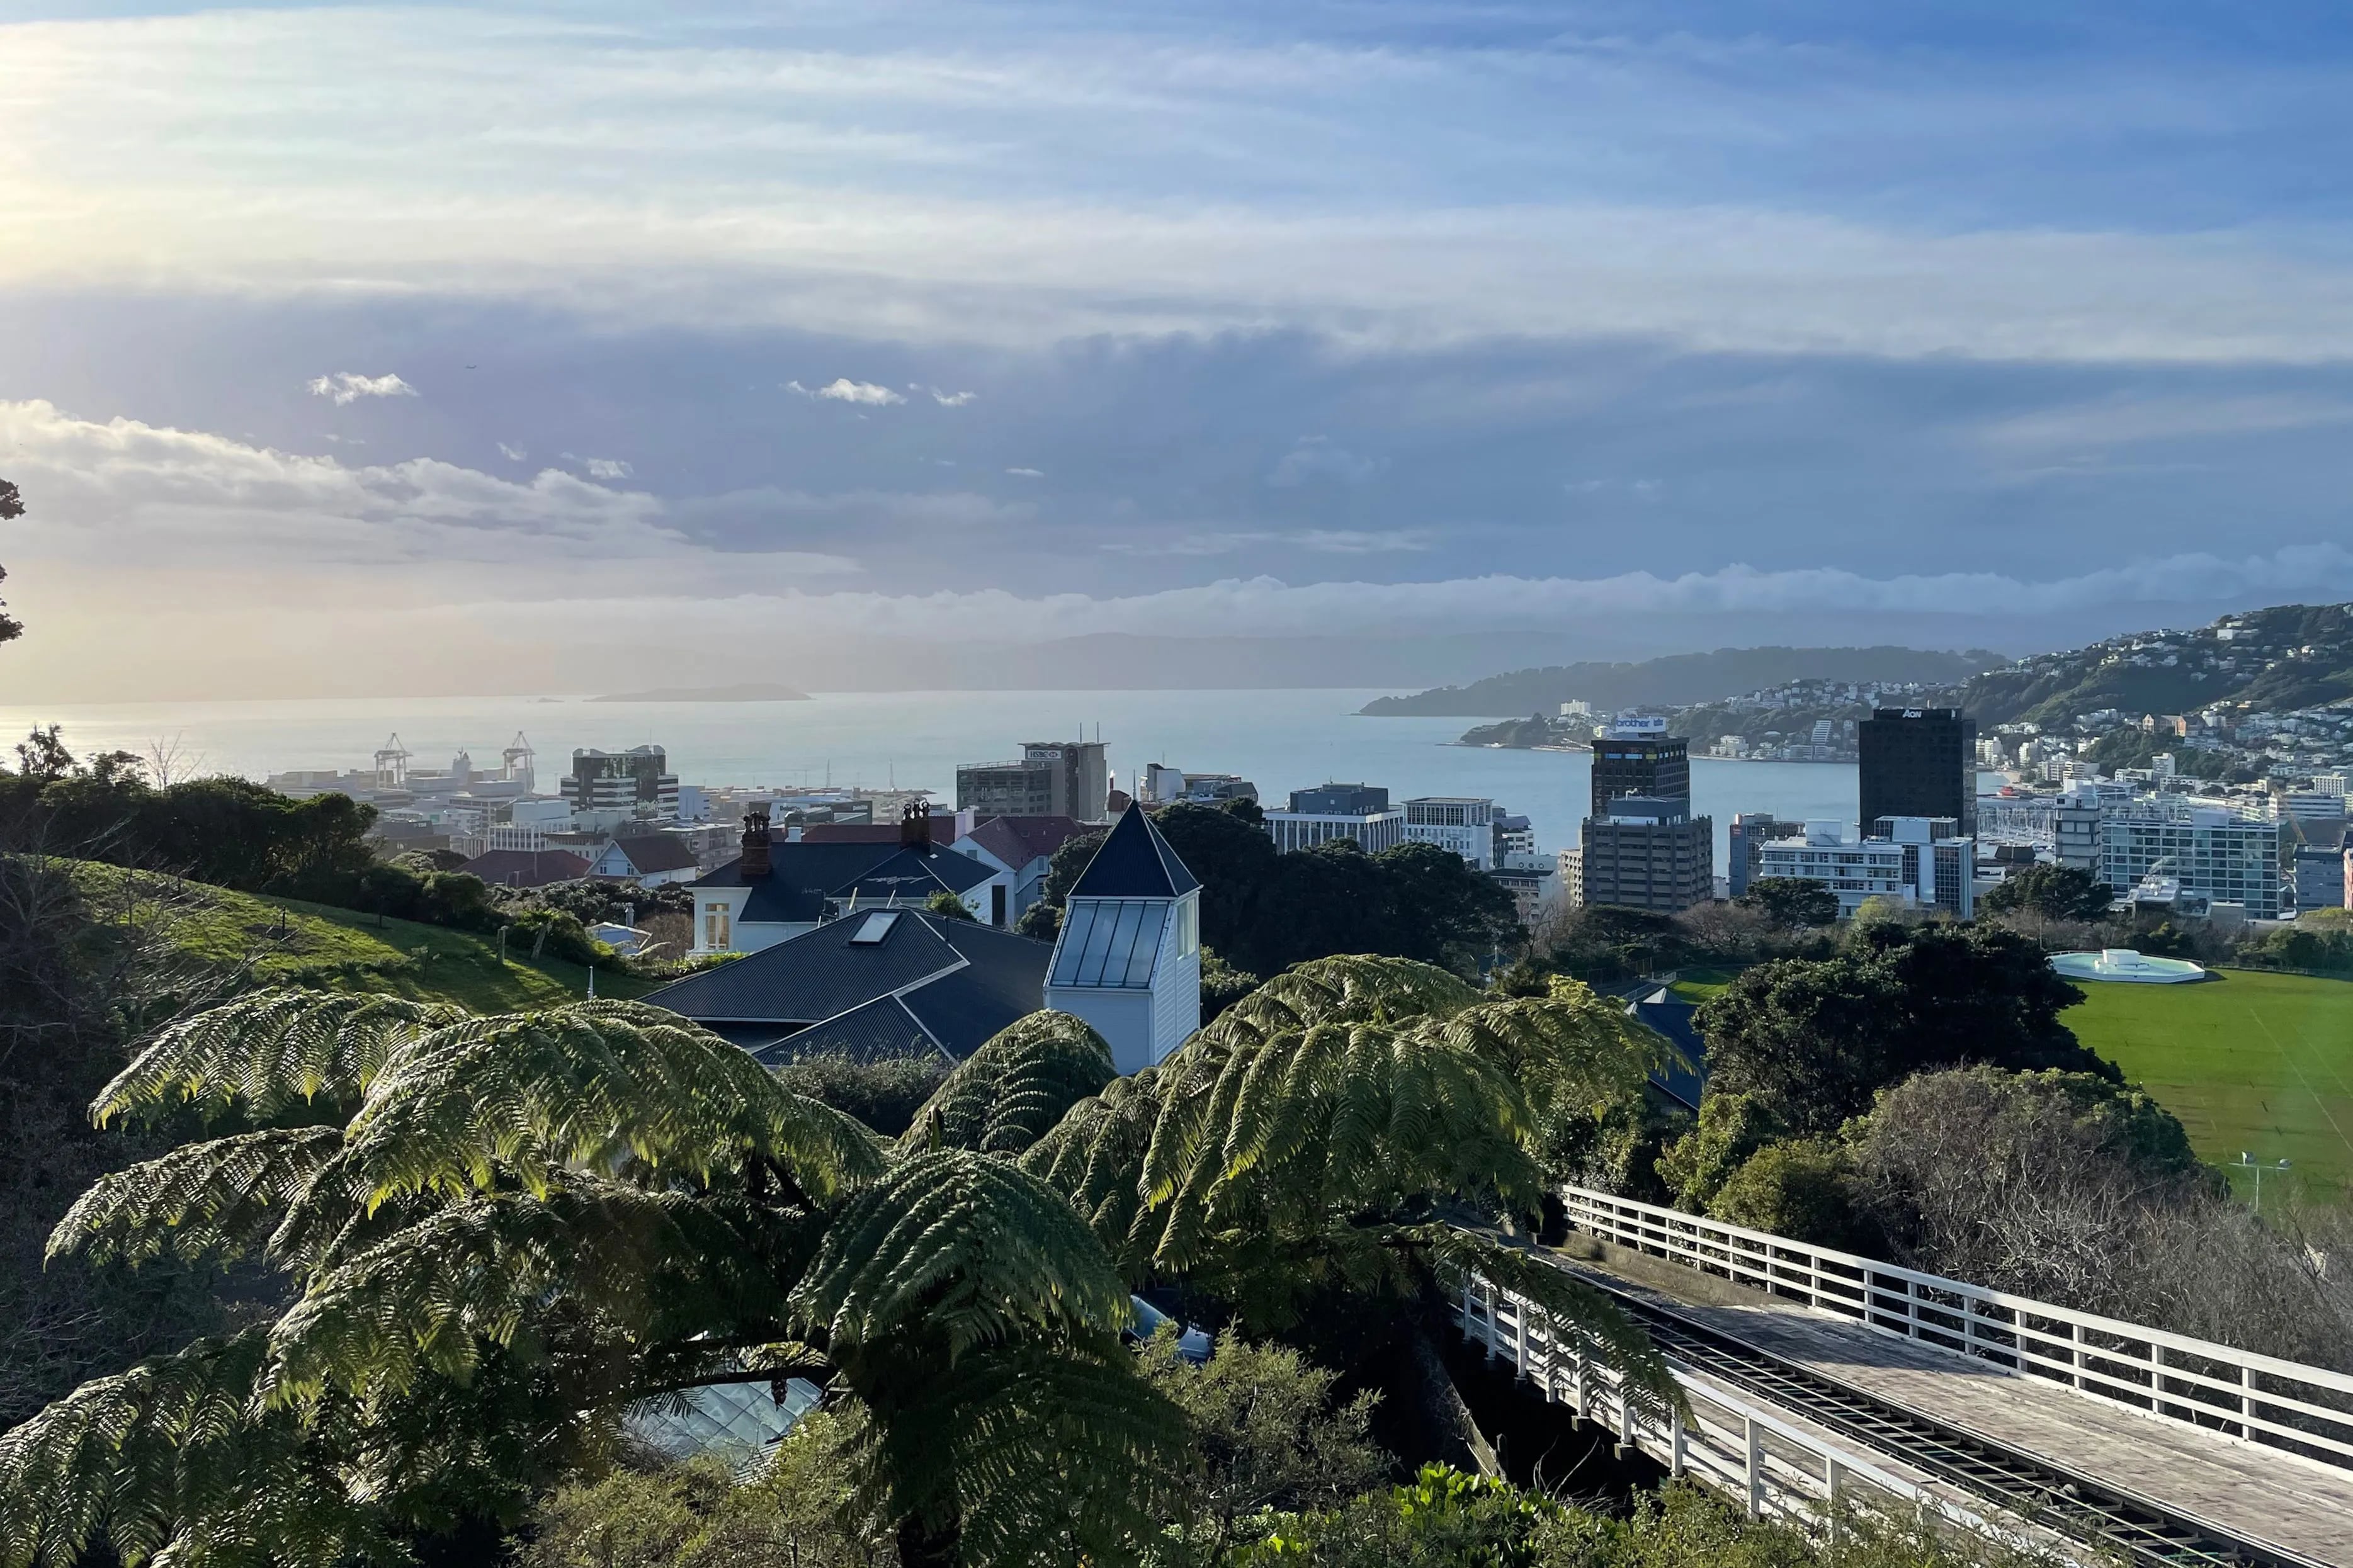 The skyline and harbor of Wellington, New Zealand.